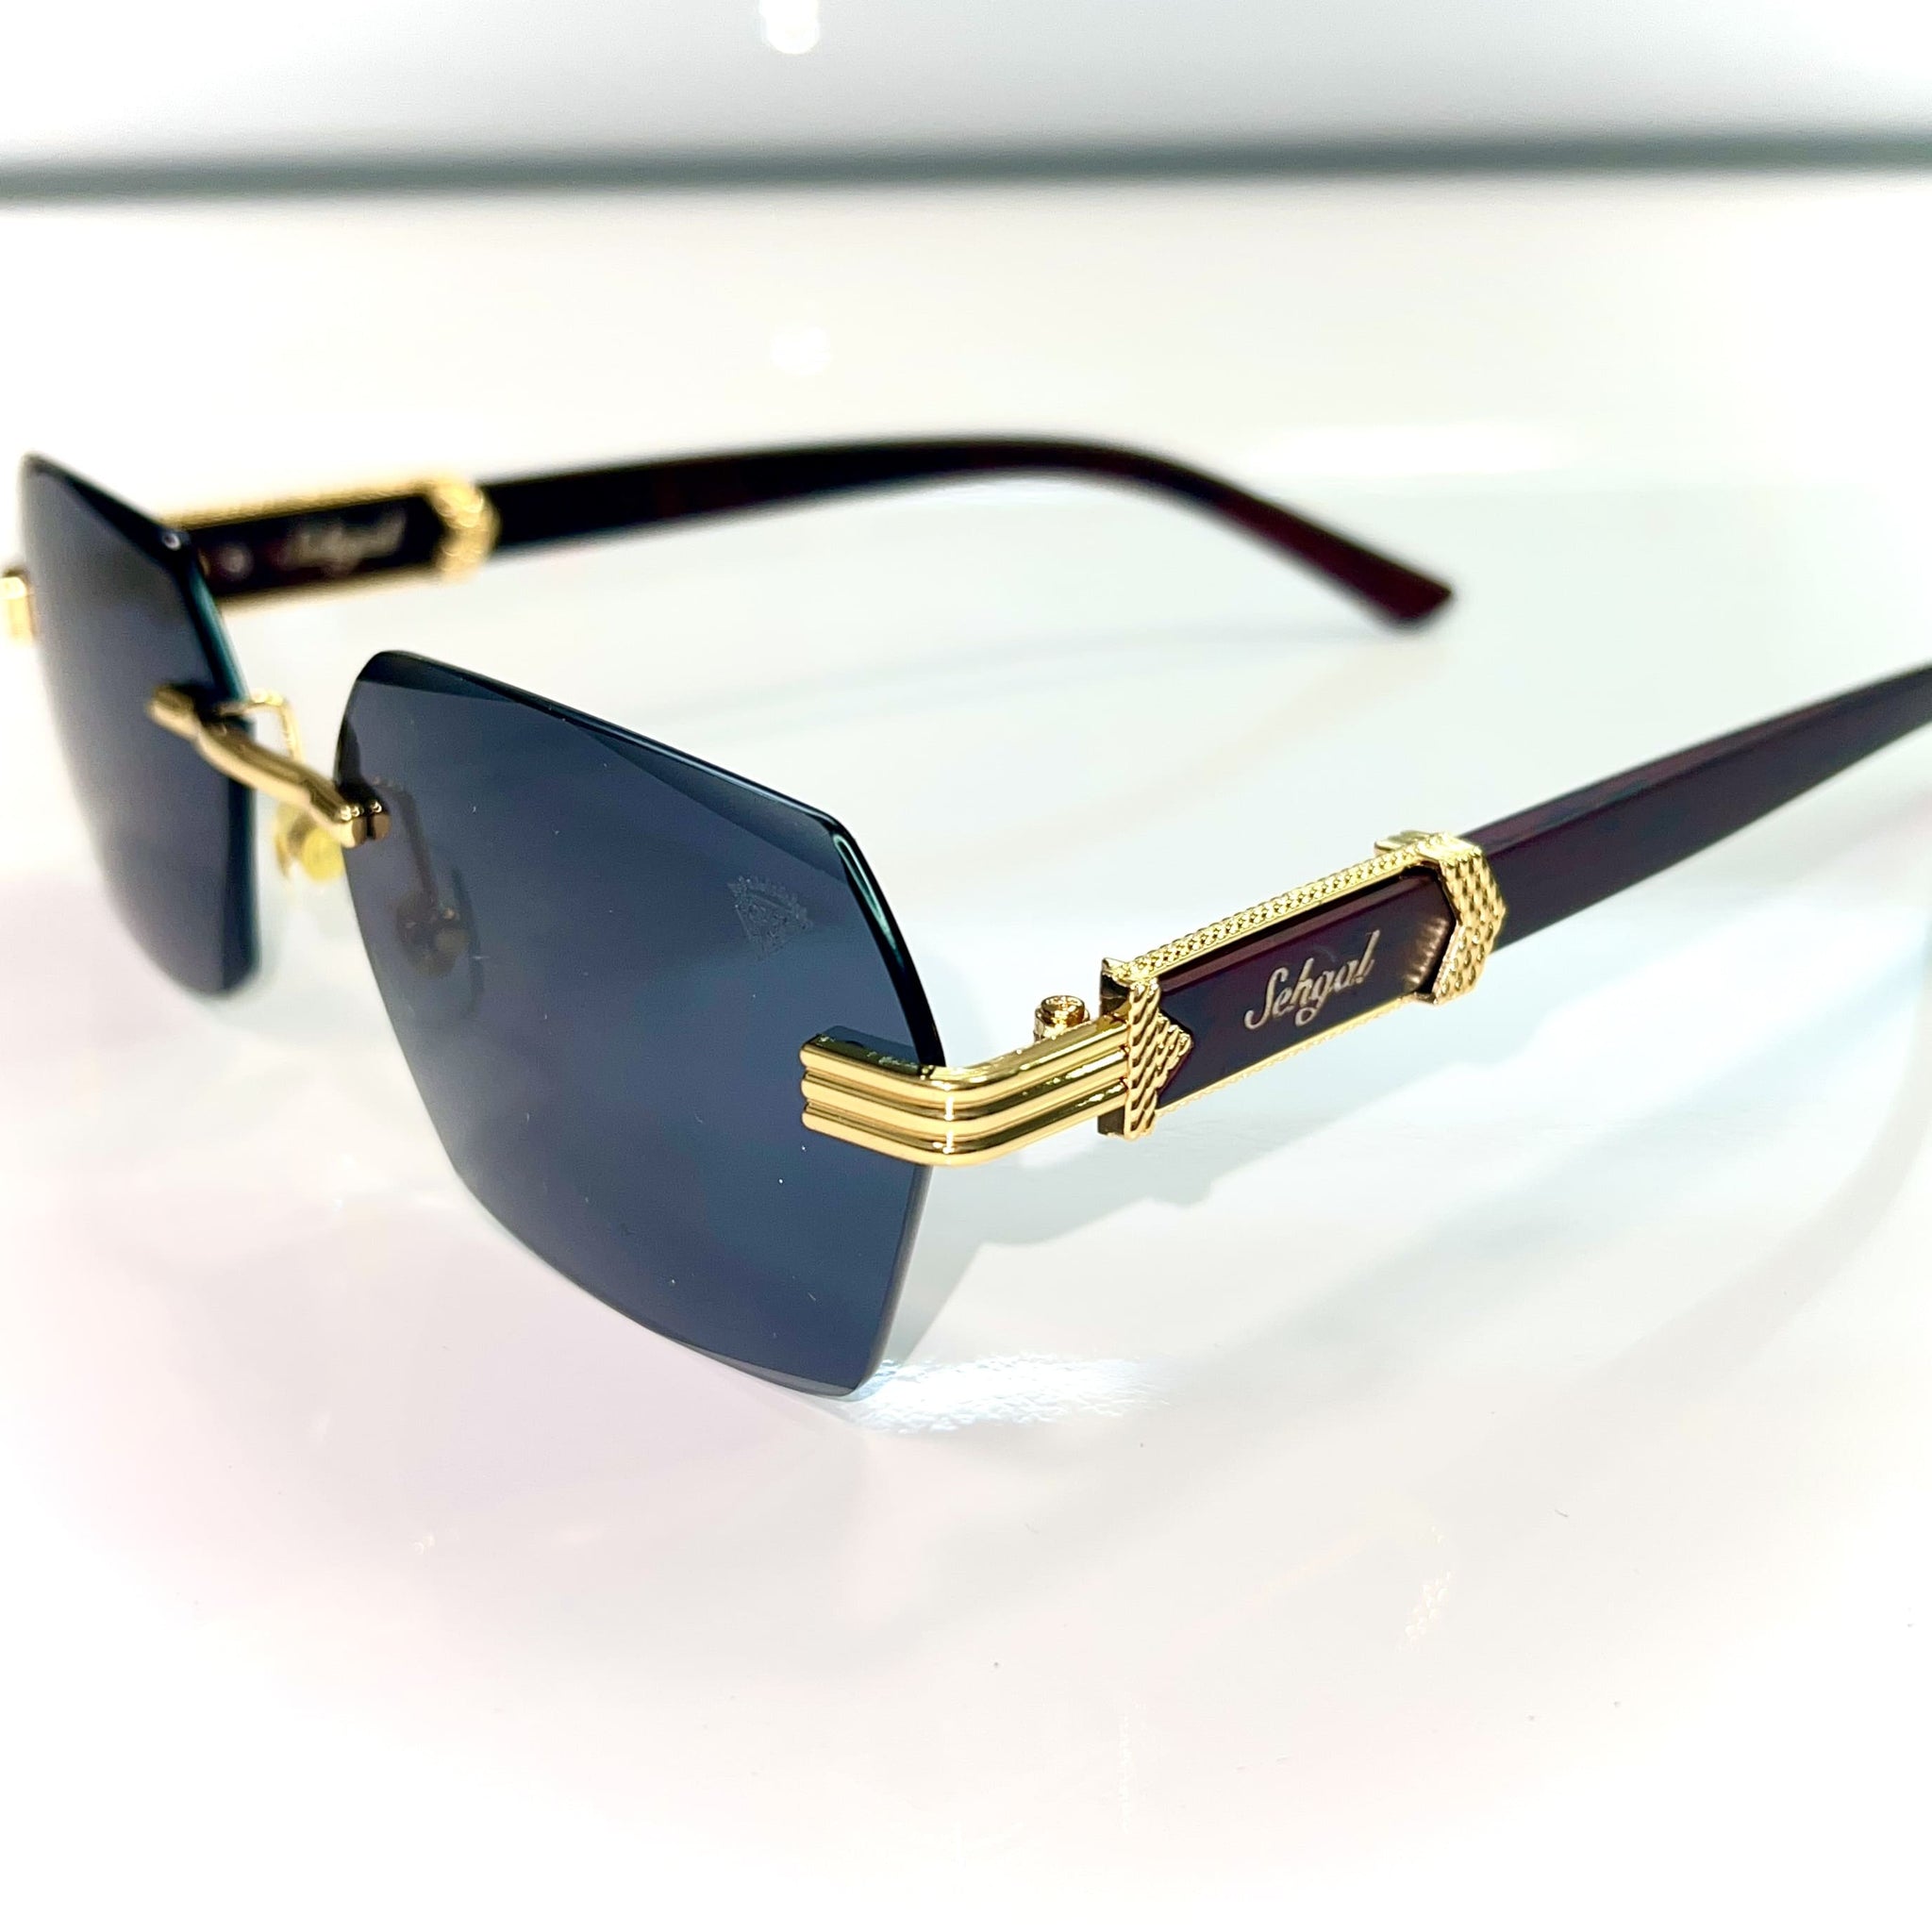 Sehgal Woodcut Glasses - 14k gold plated - Black shade - Gold / Woodgrain frame